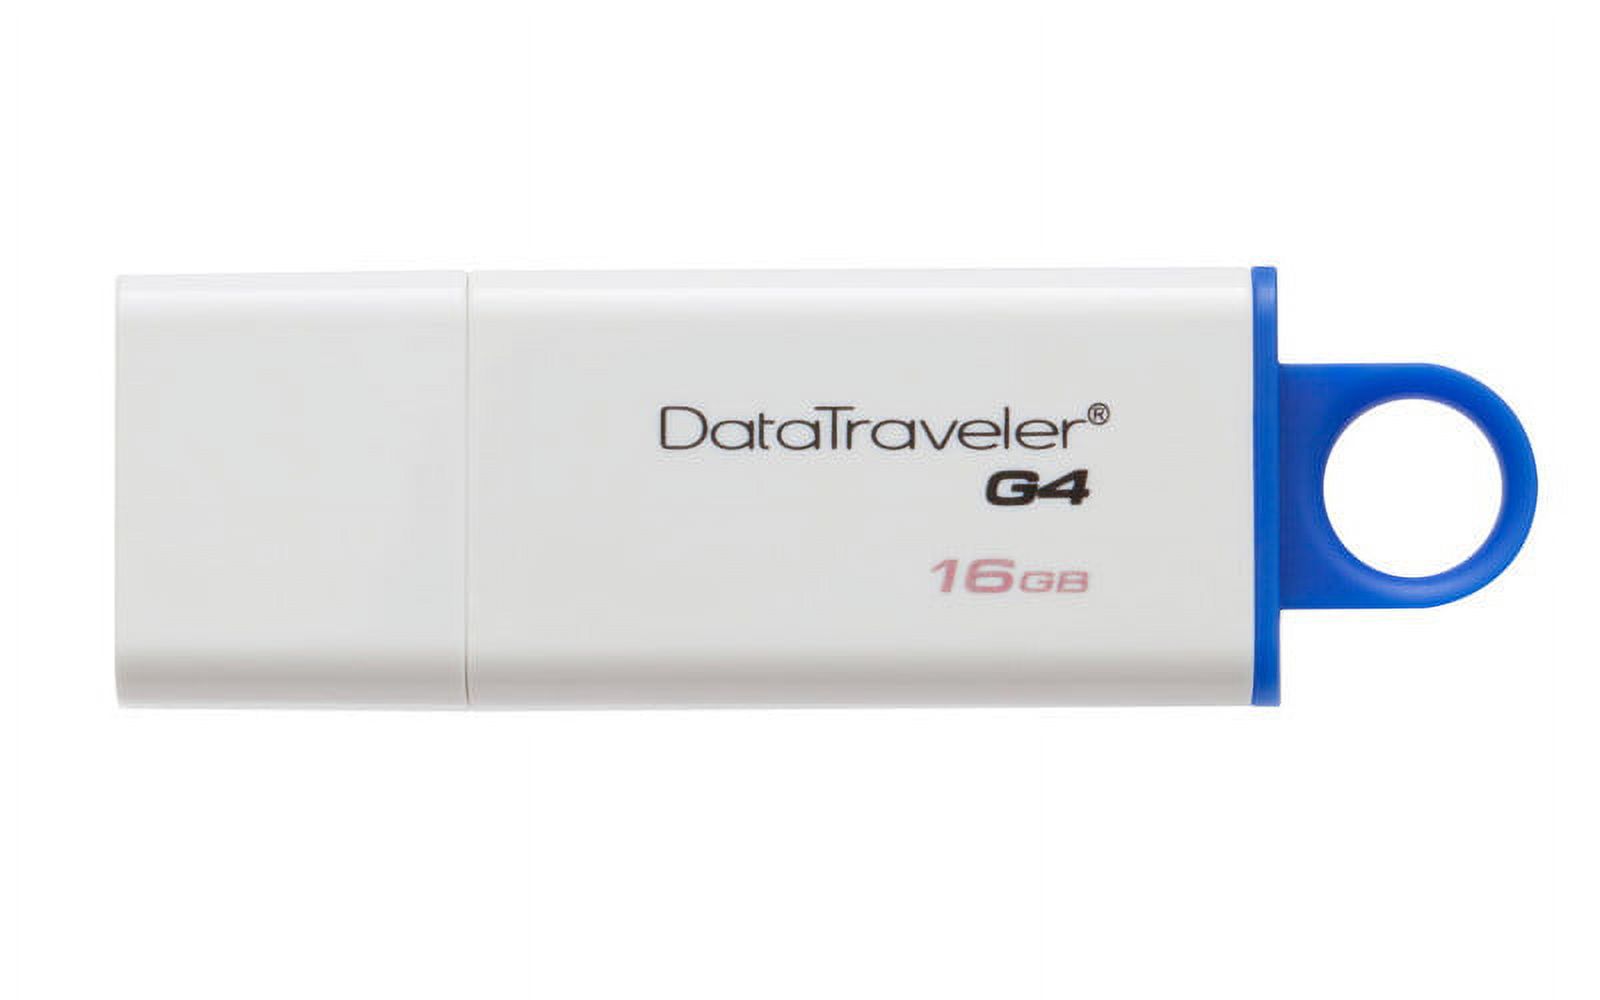 Kingston DataTraveler G4 16GB USB 3.0 Flash Drive Blue - image 4 of 5